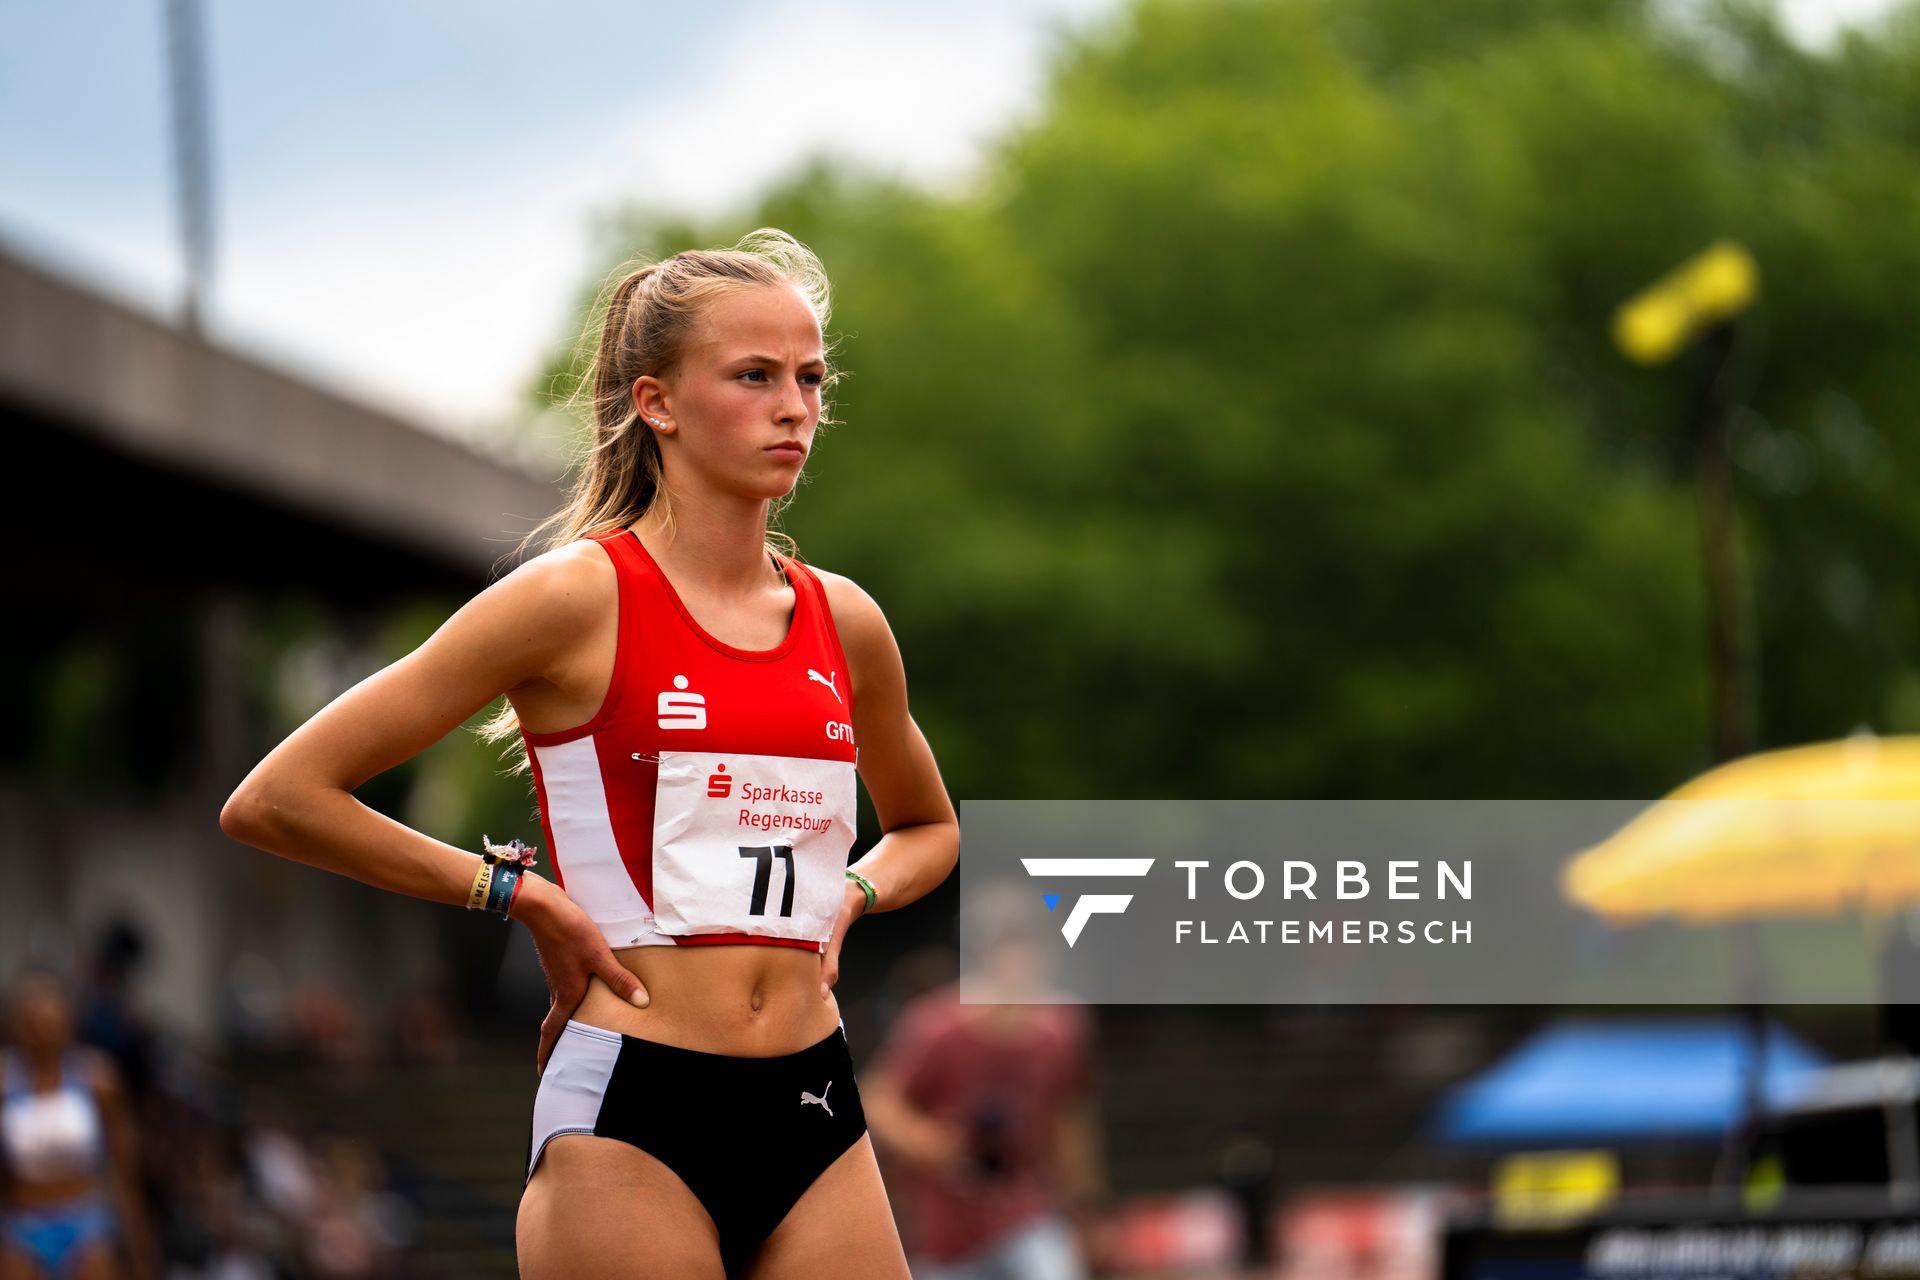 Karolina Mia Haas (LG Olympia Dortmund) ueber 400m am 04.06.2022 waehrend der Sparkassen Gala in Regensburg